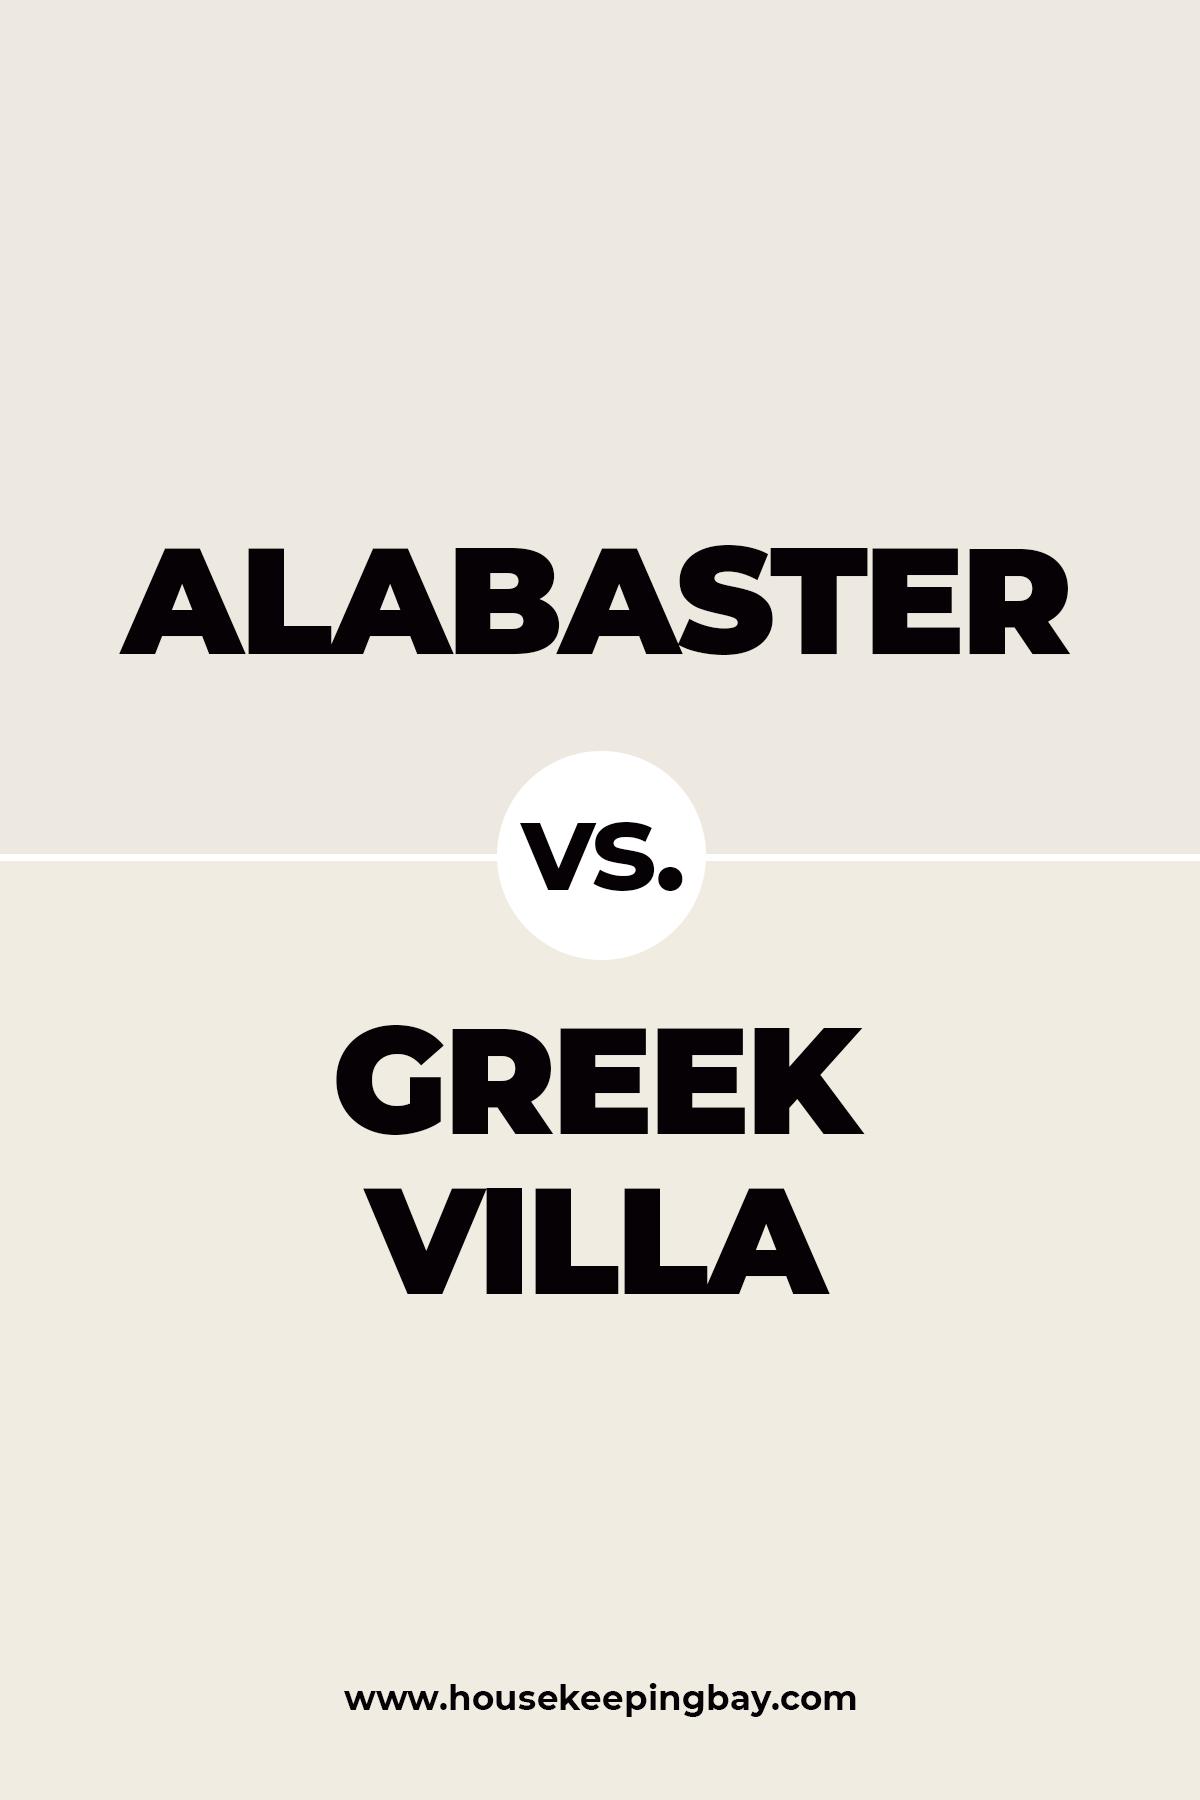 Alabaster vs. Greek villa